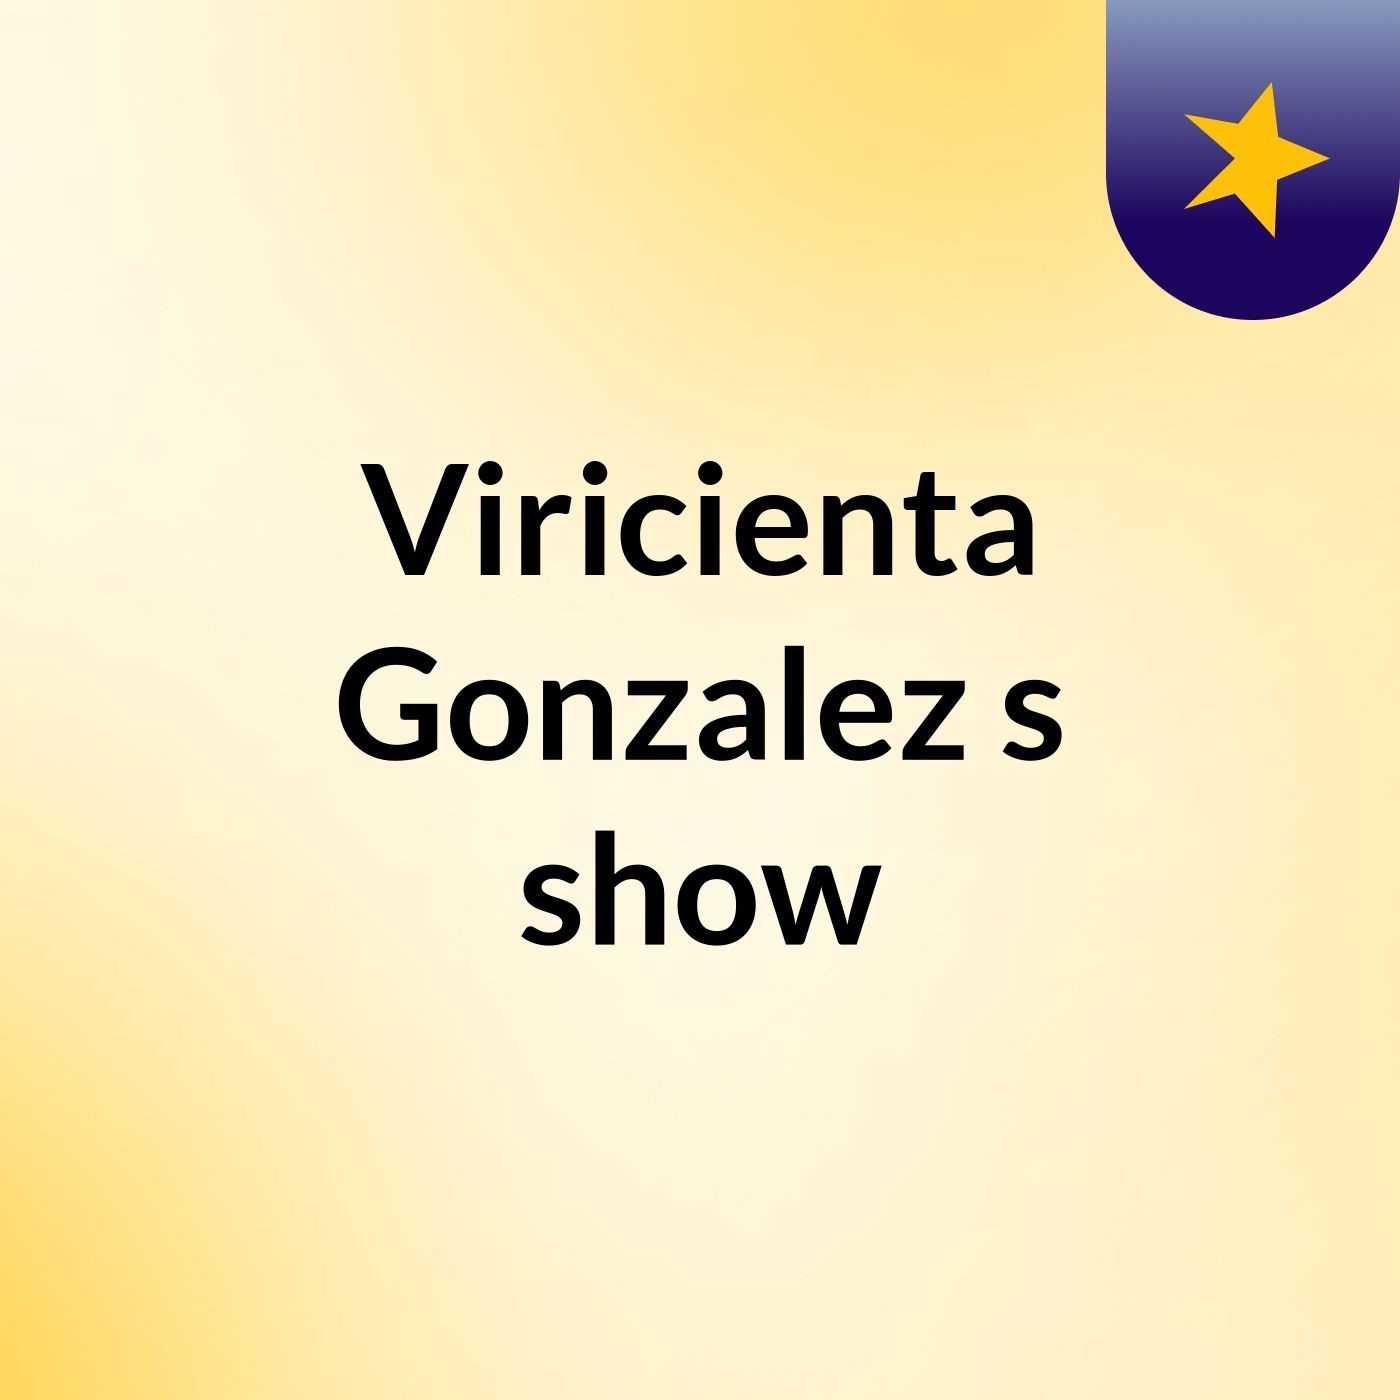 Viricienta Gonzalez's show